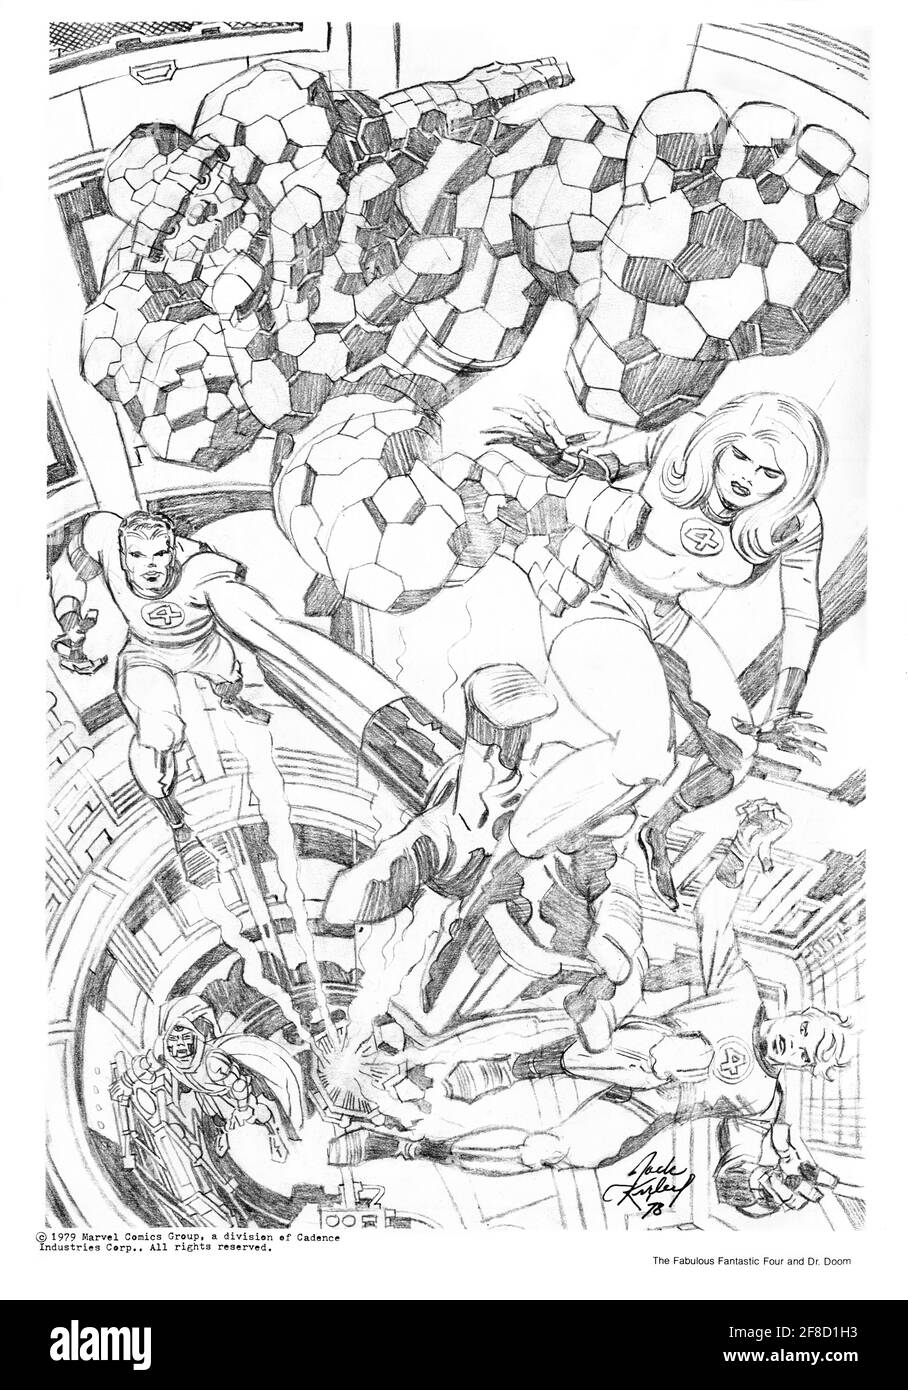 Fantastic 4 - 1978 Jack Kirby's sketch - Marvel comics Stock Photo